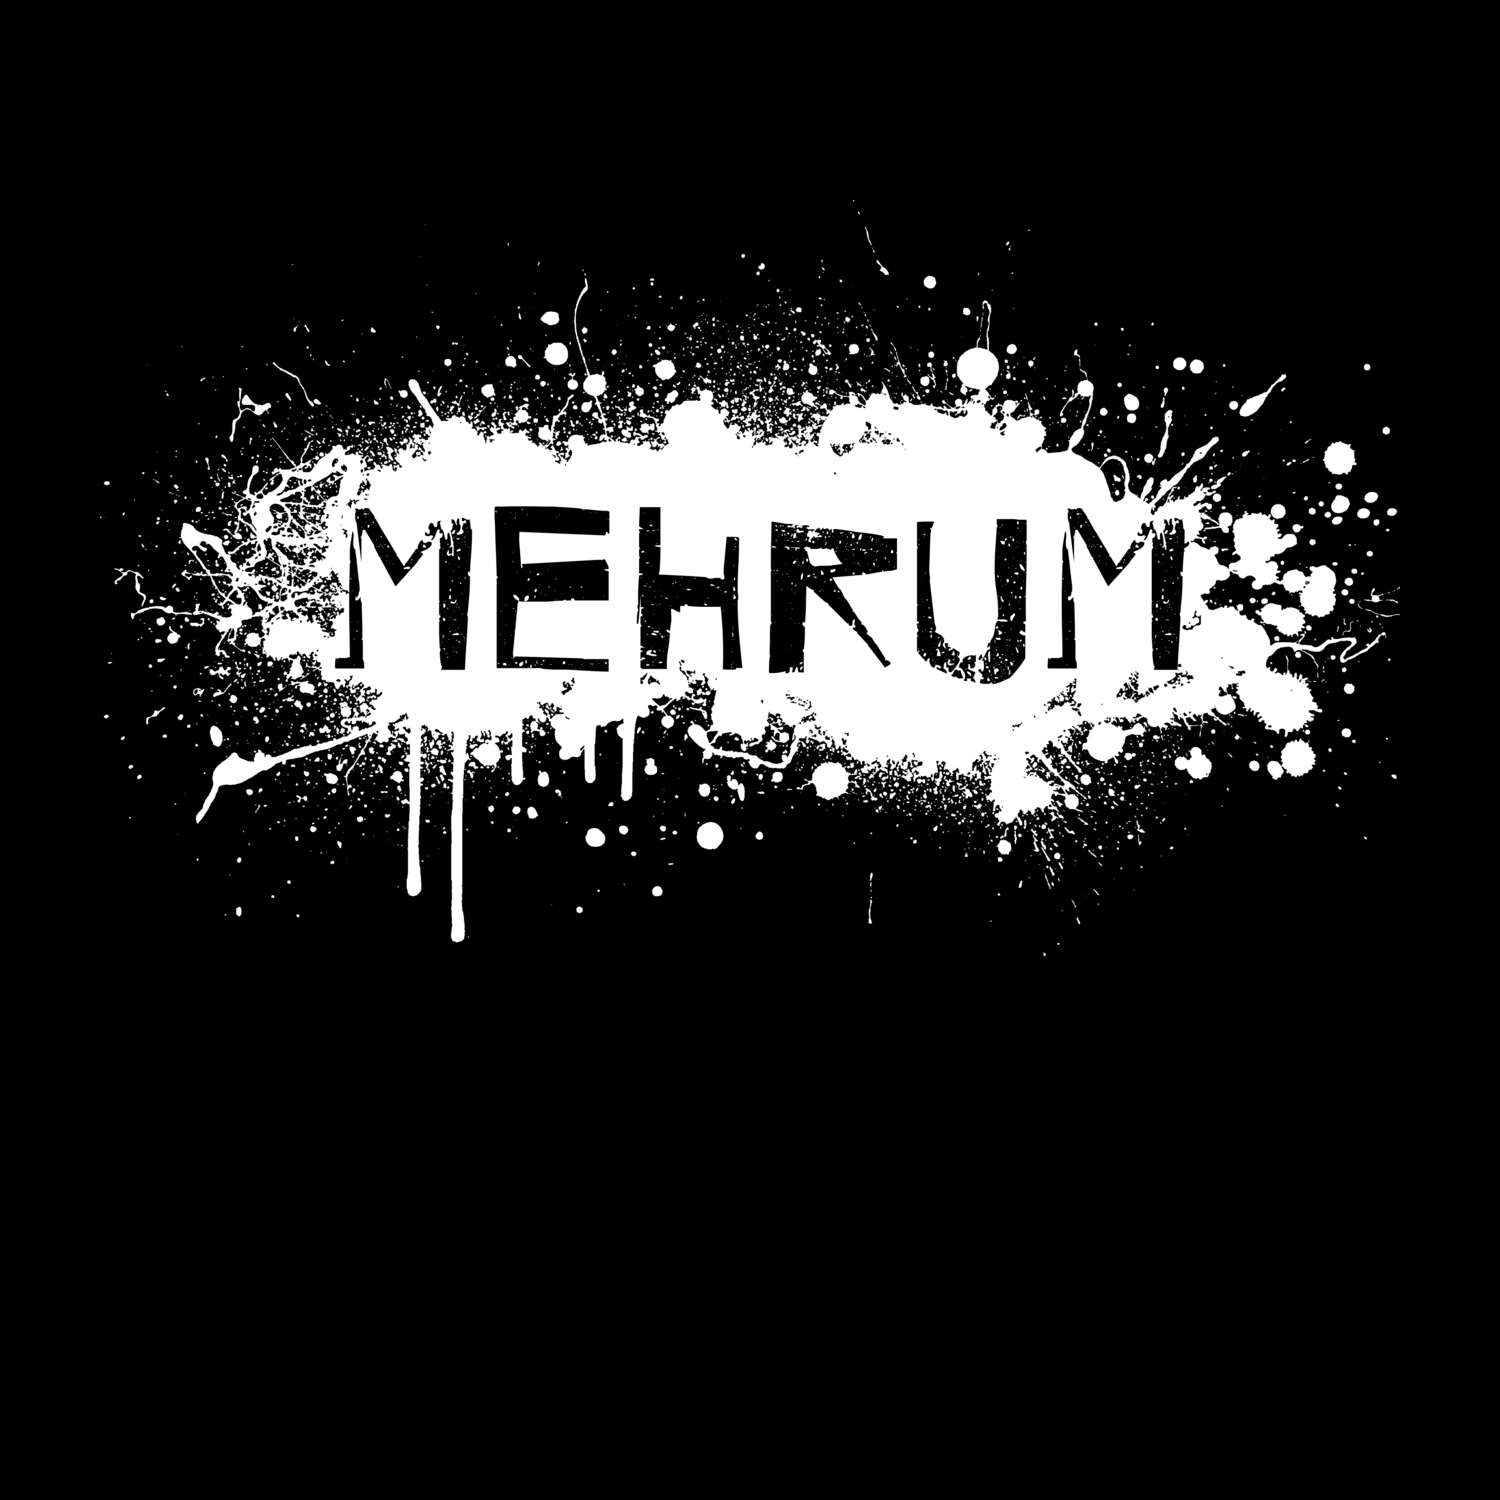 Mehrum T-Shirt »Paint Splash Punk«